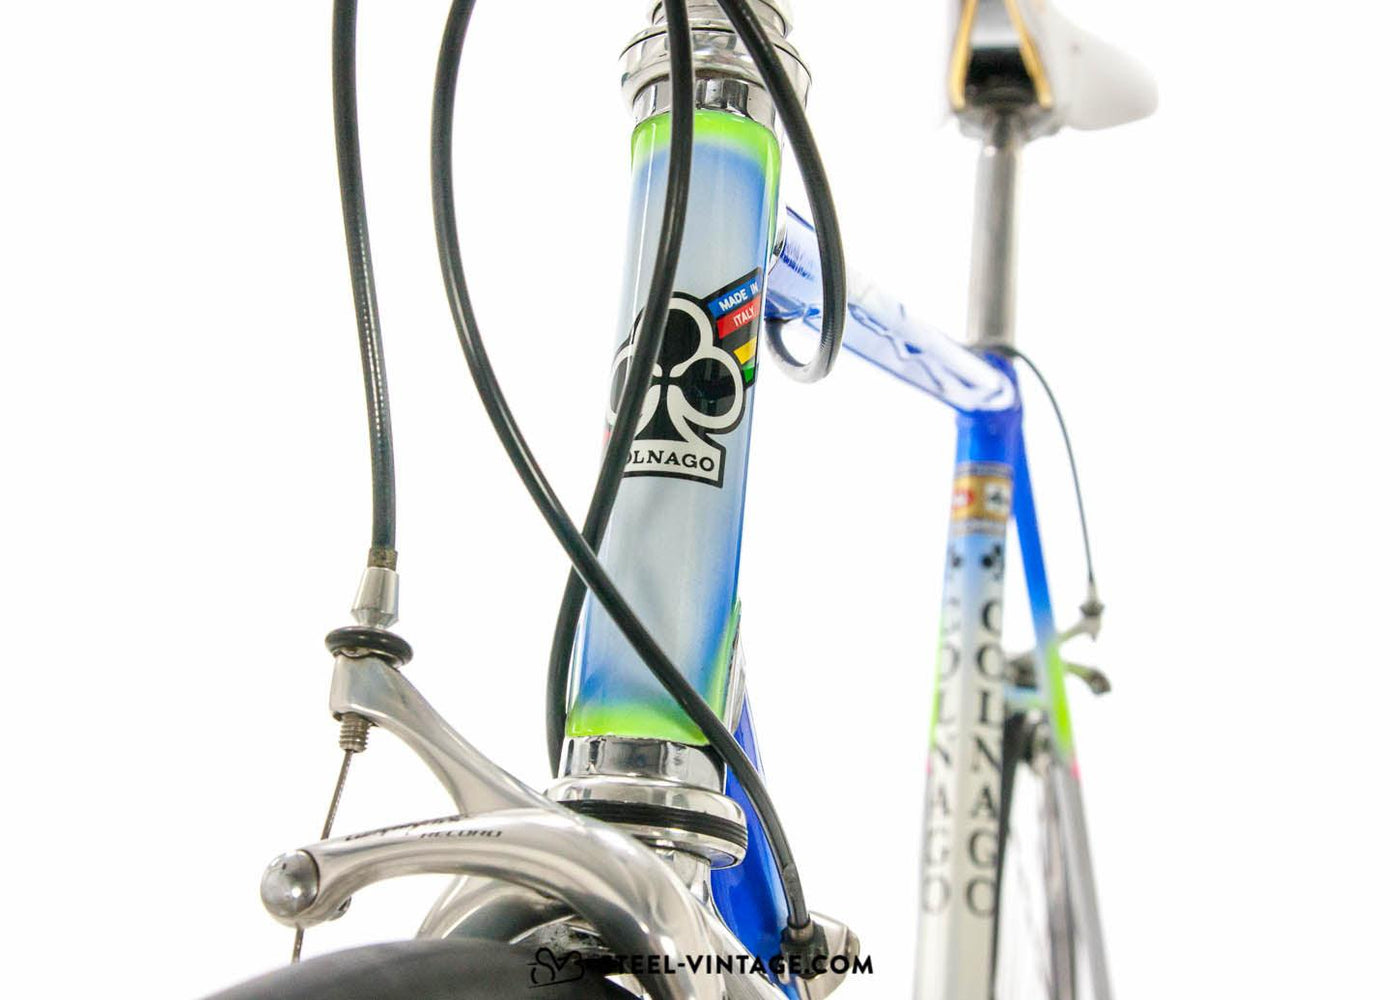 Colnago Master Olympic Record Road Bike 1990s - Steel Vintage Bikes